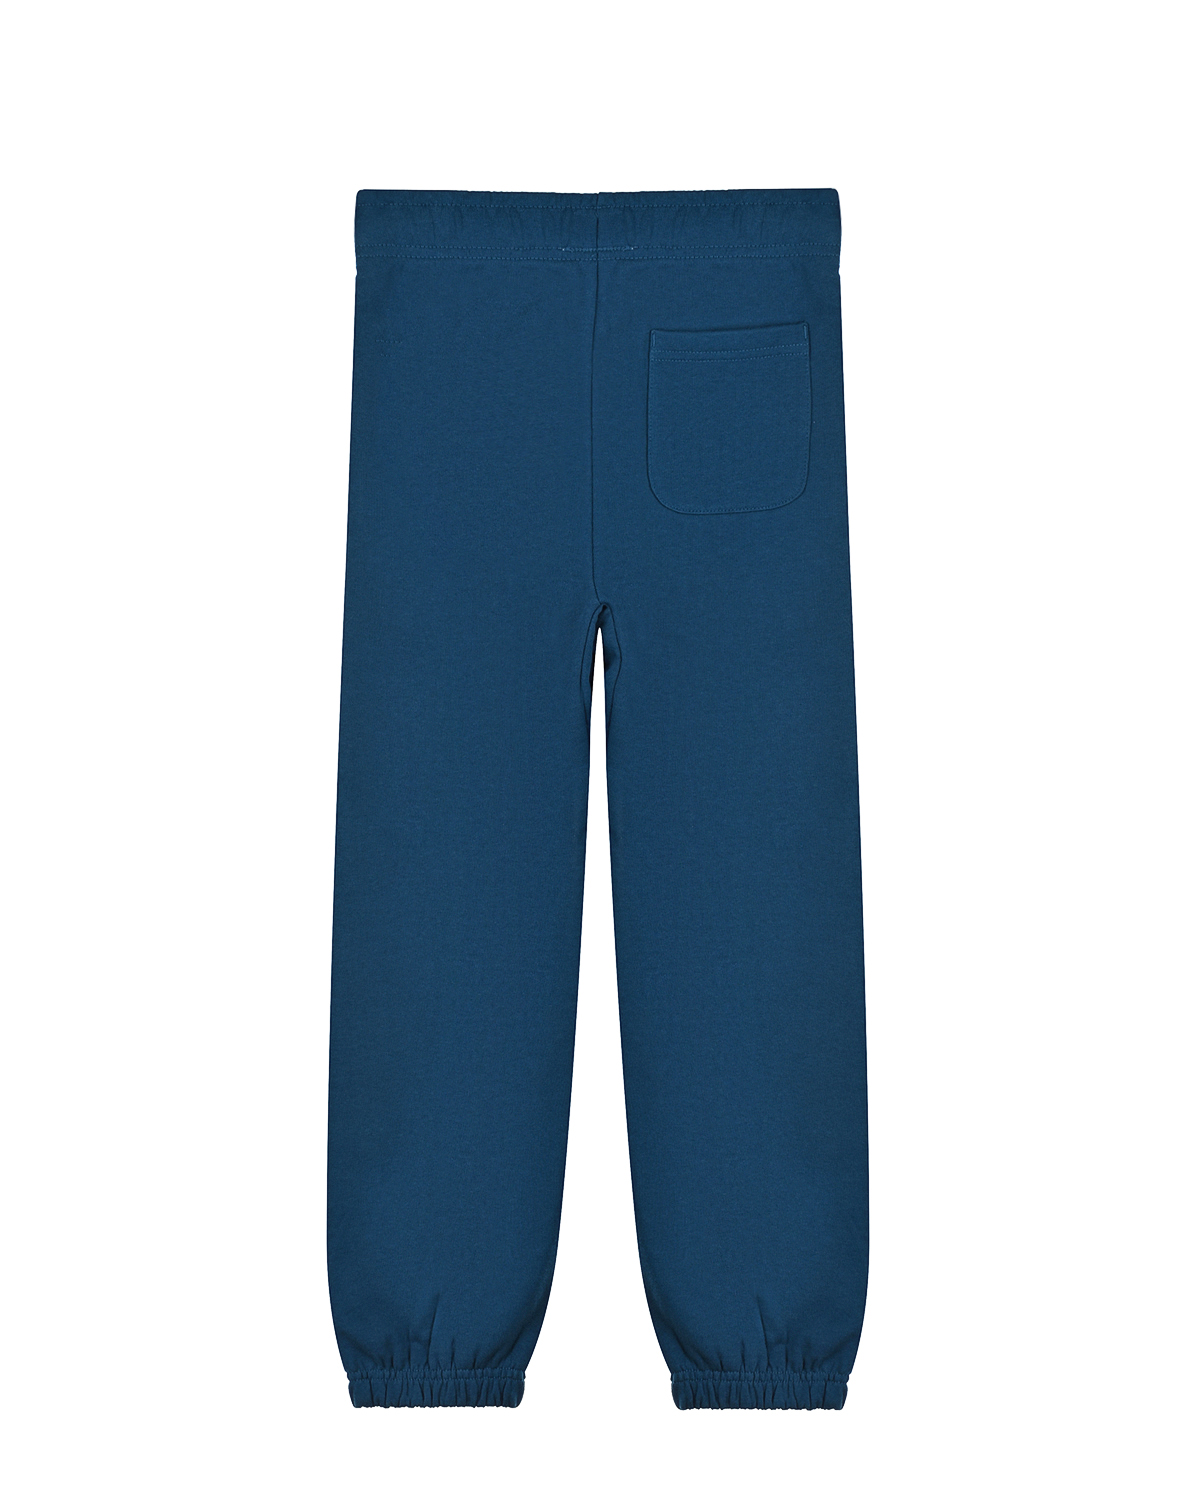 Спортивные брюки Ams "Sea" Molo детские, размер 152, цвет синий - фото 3